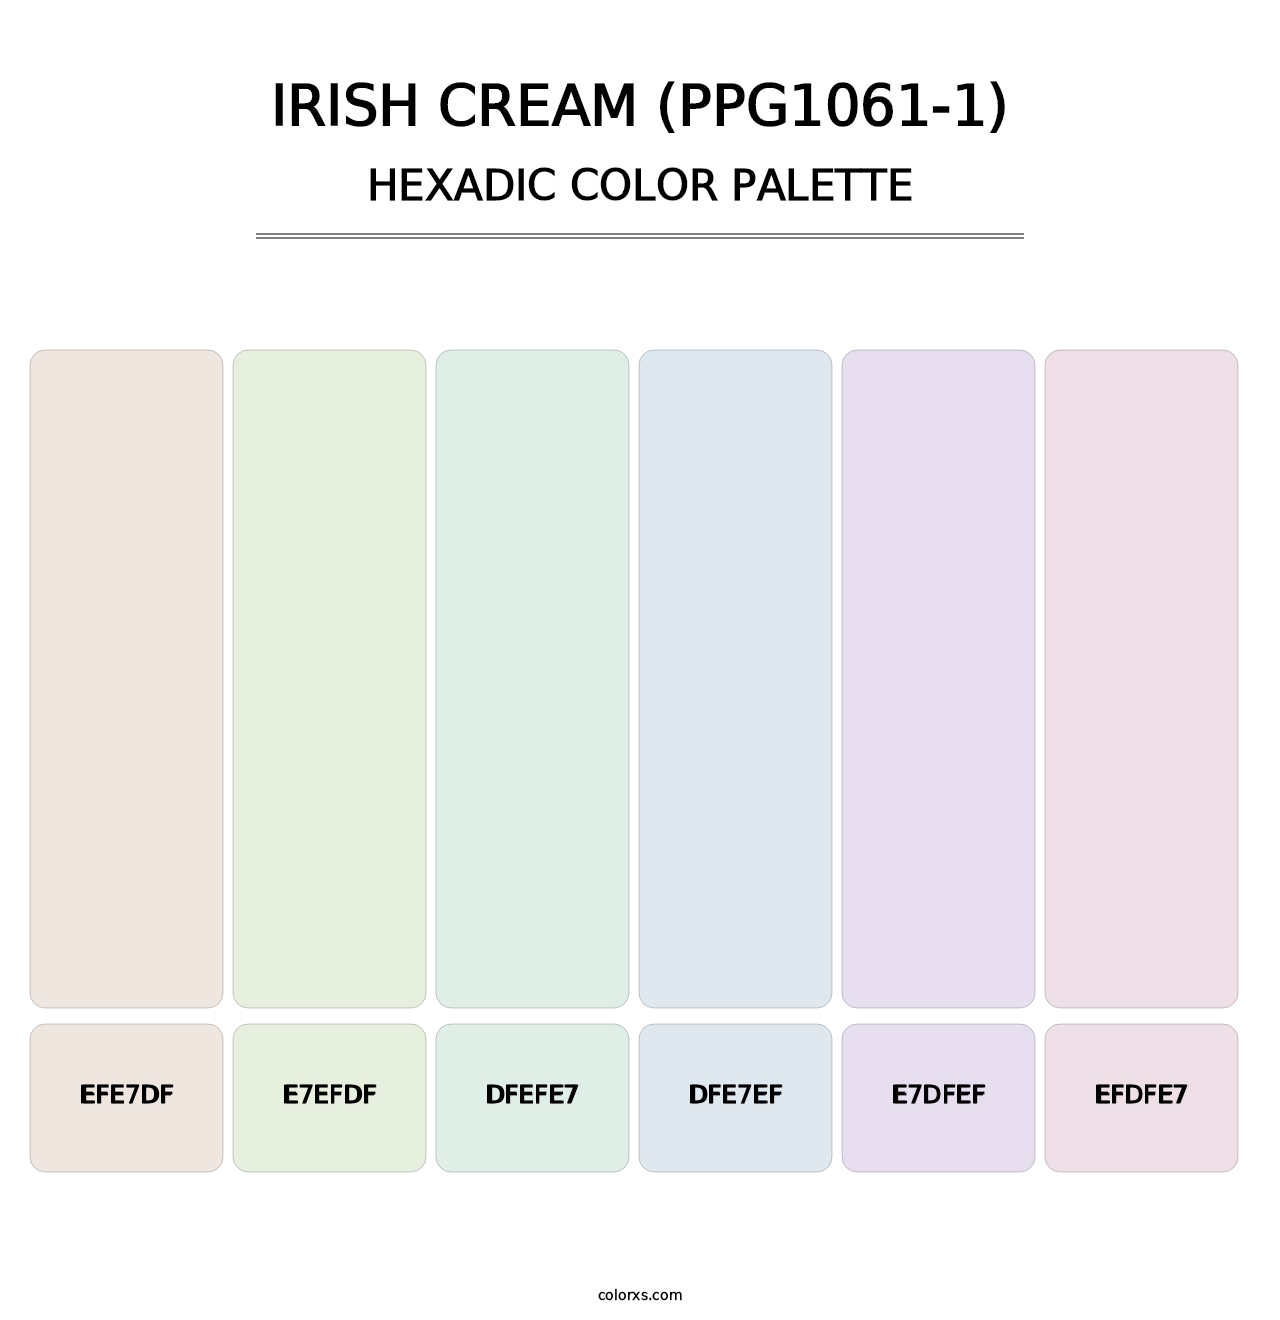 Irish Cream (PPG1061-1) - Hexadic Color Palette